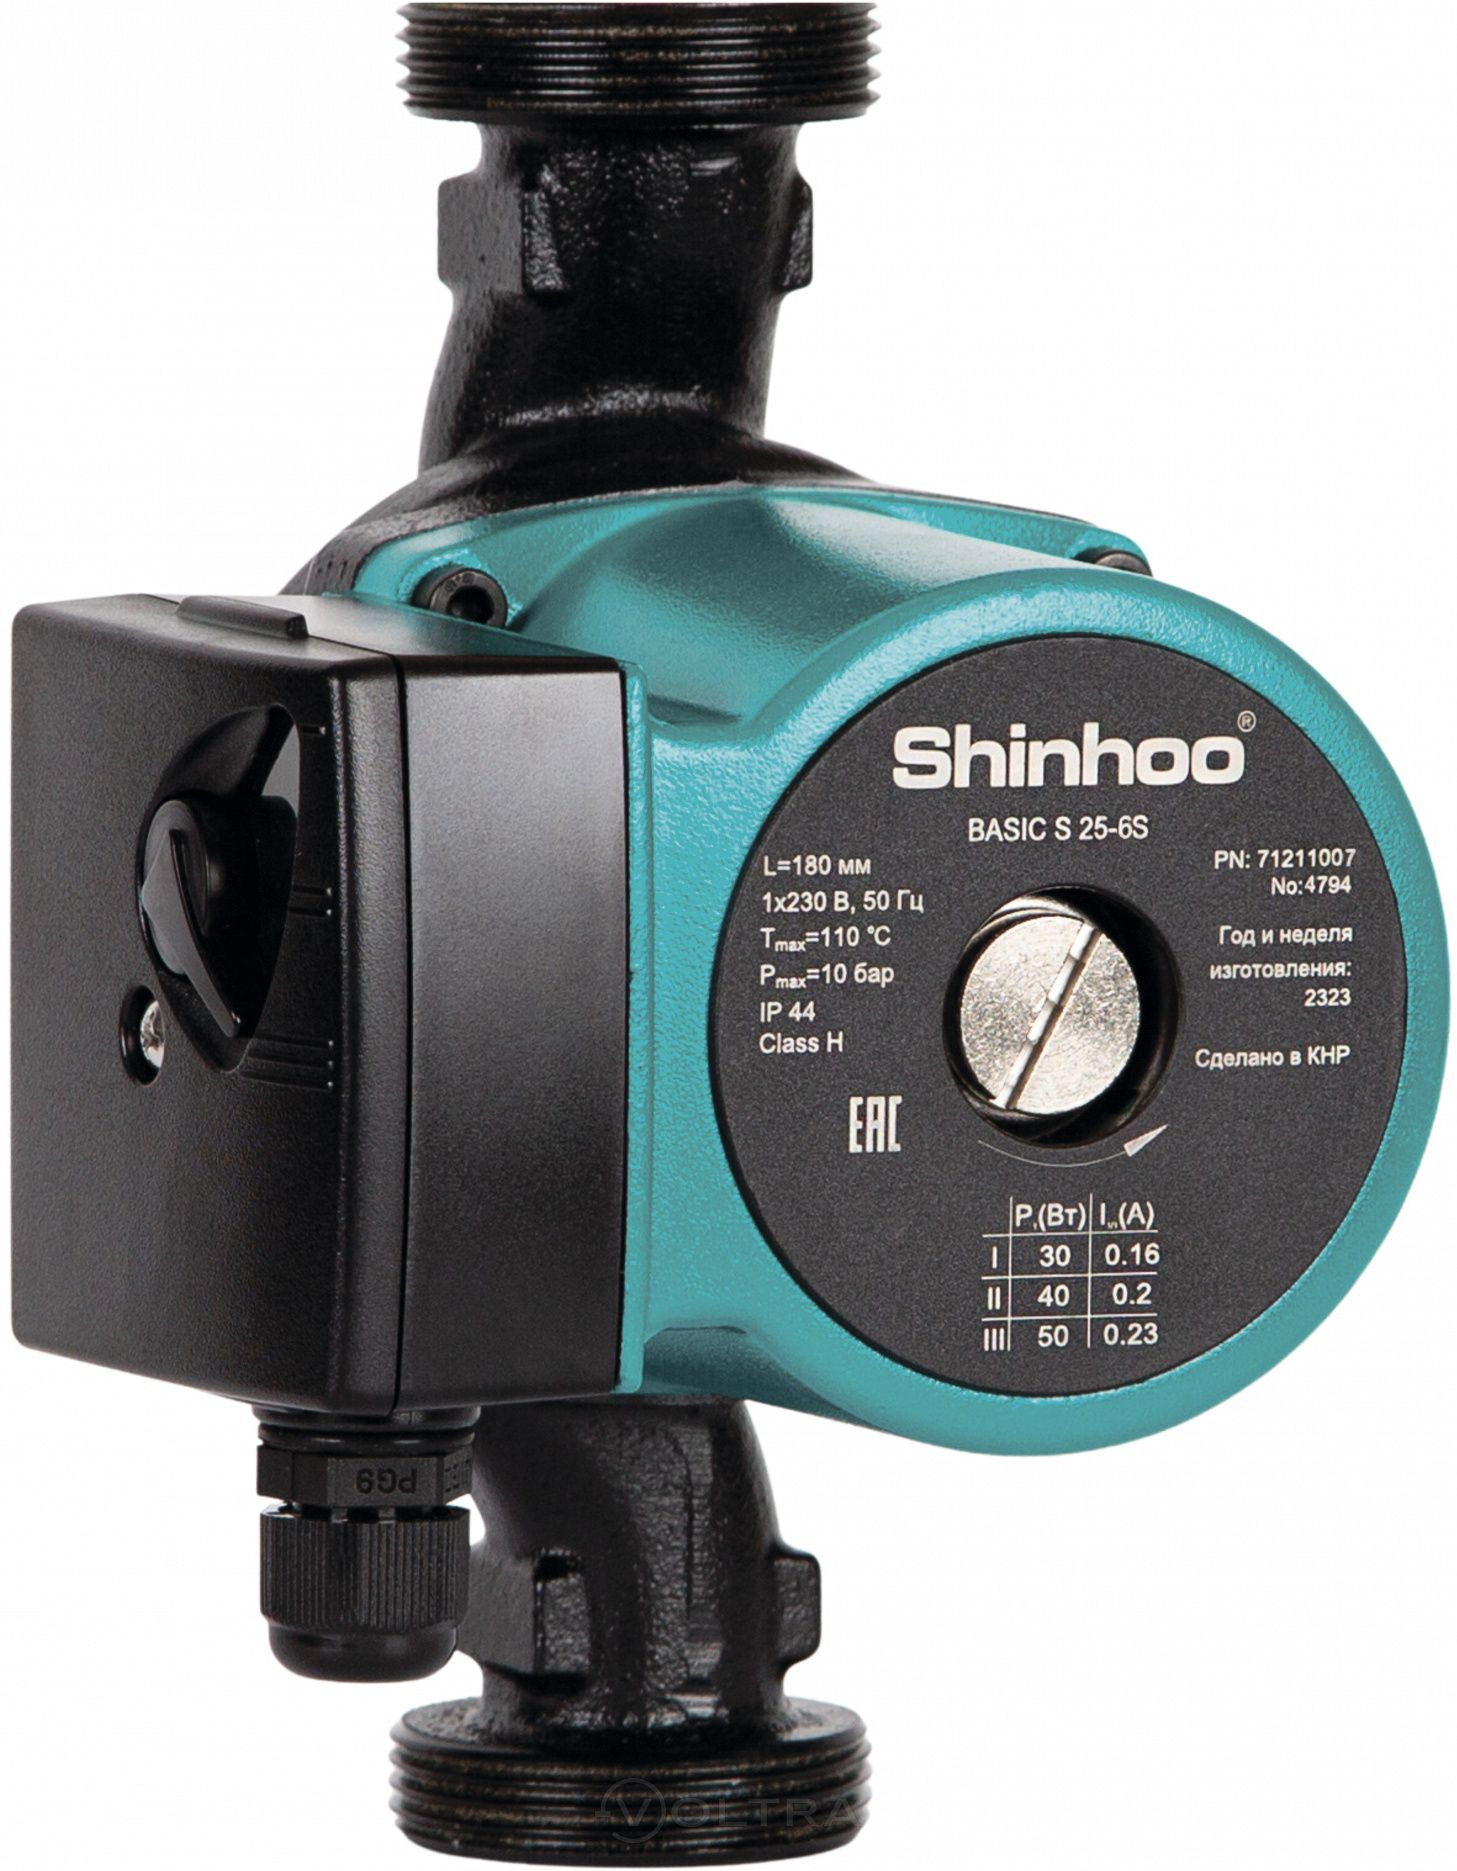 SHINHOO BASIC S 15-6S 130